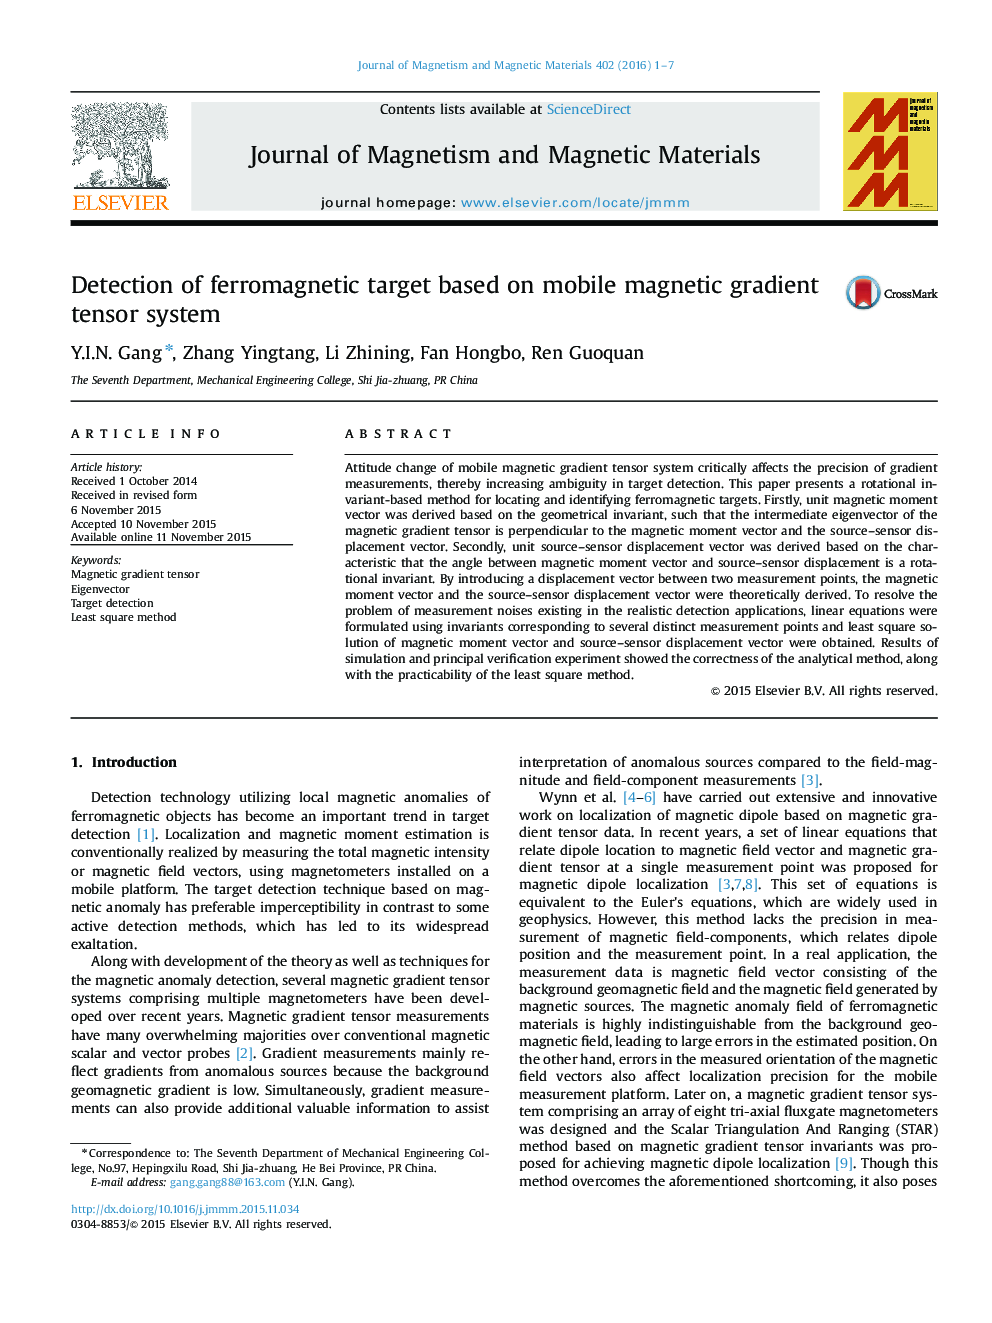 Detection of ferromagnetic target based on mobile magnetic gradient tensor system